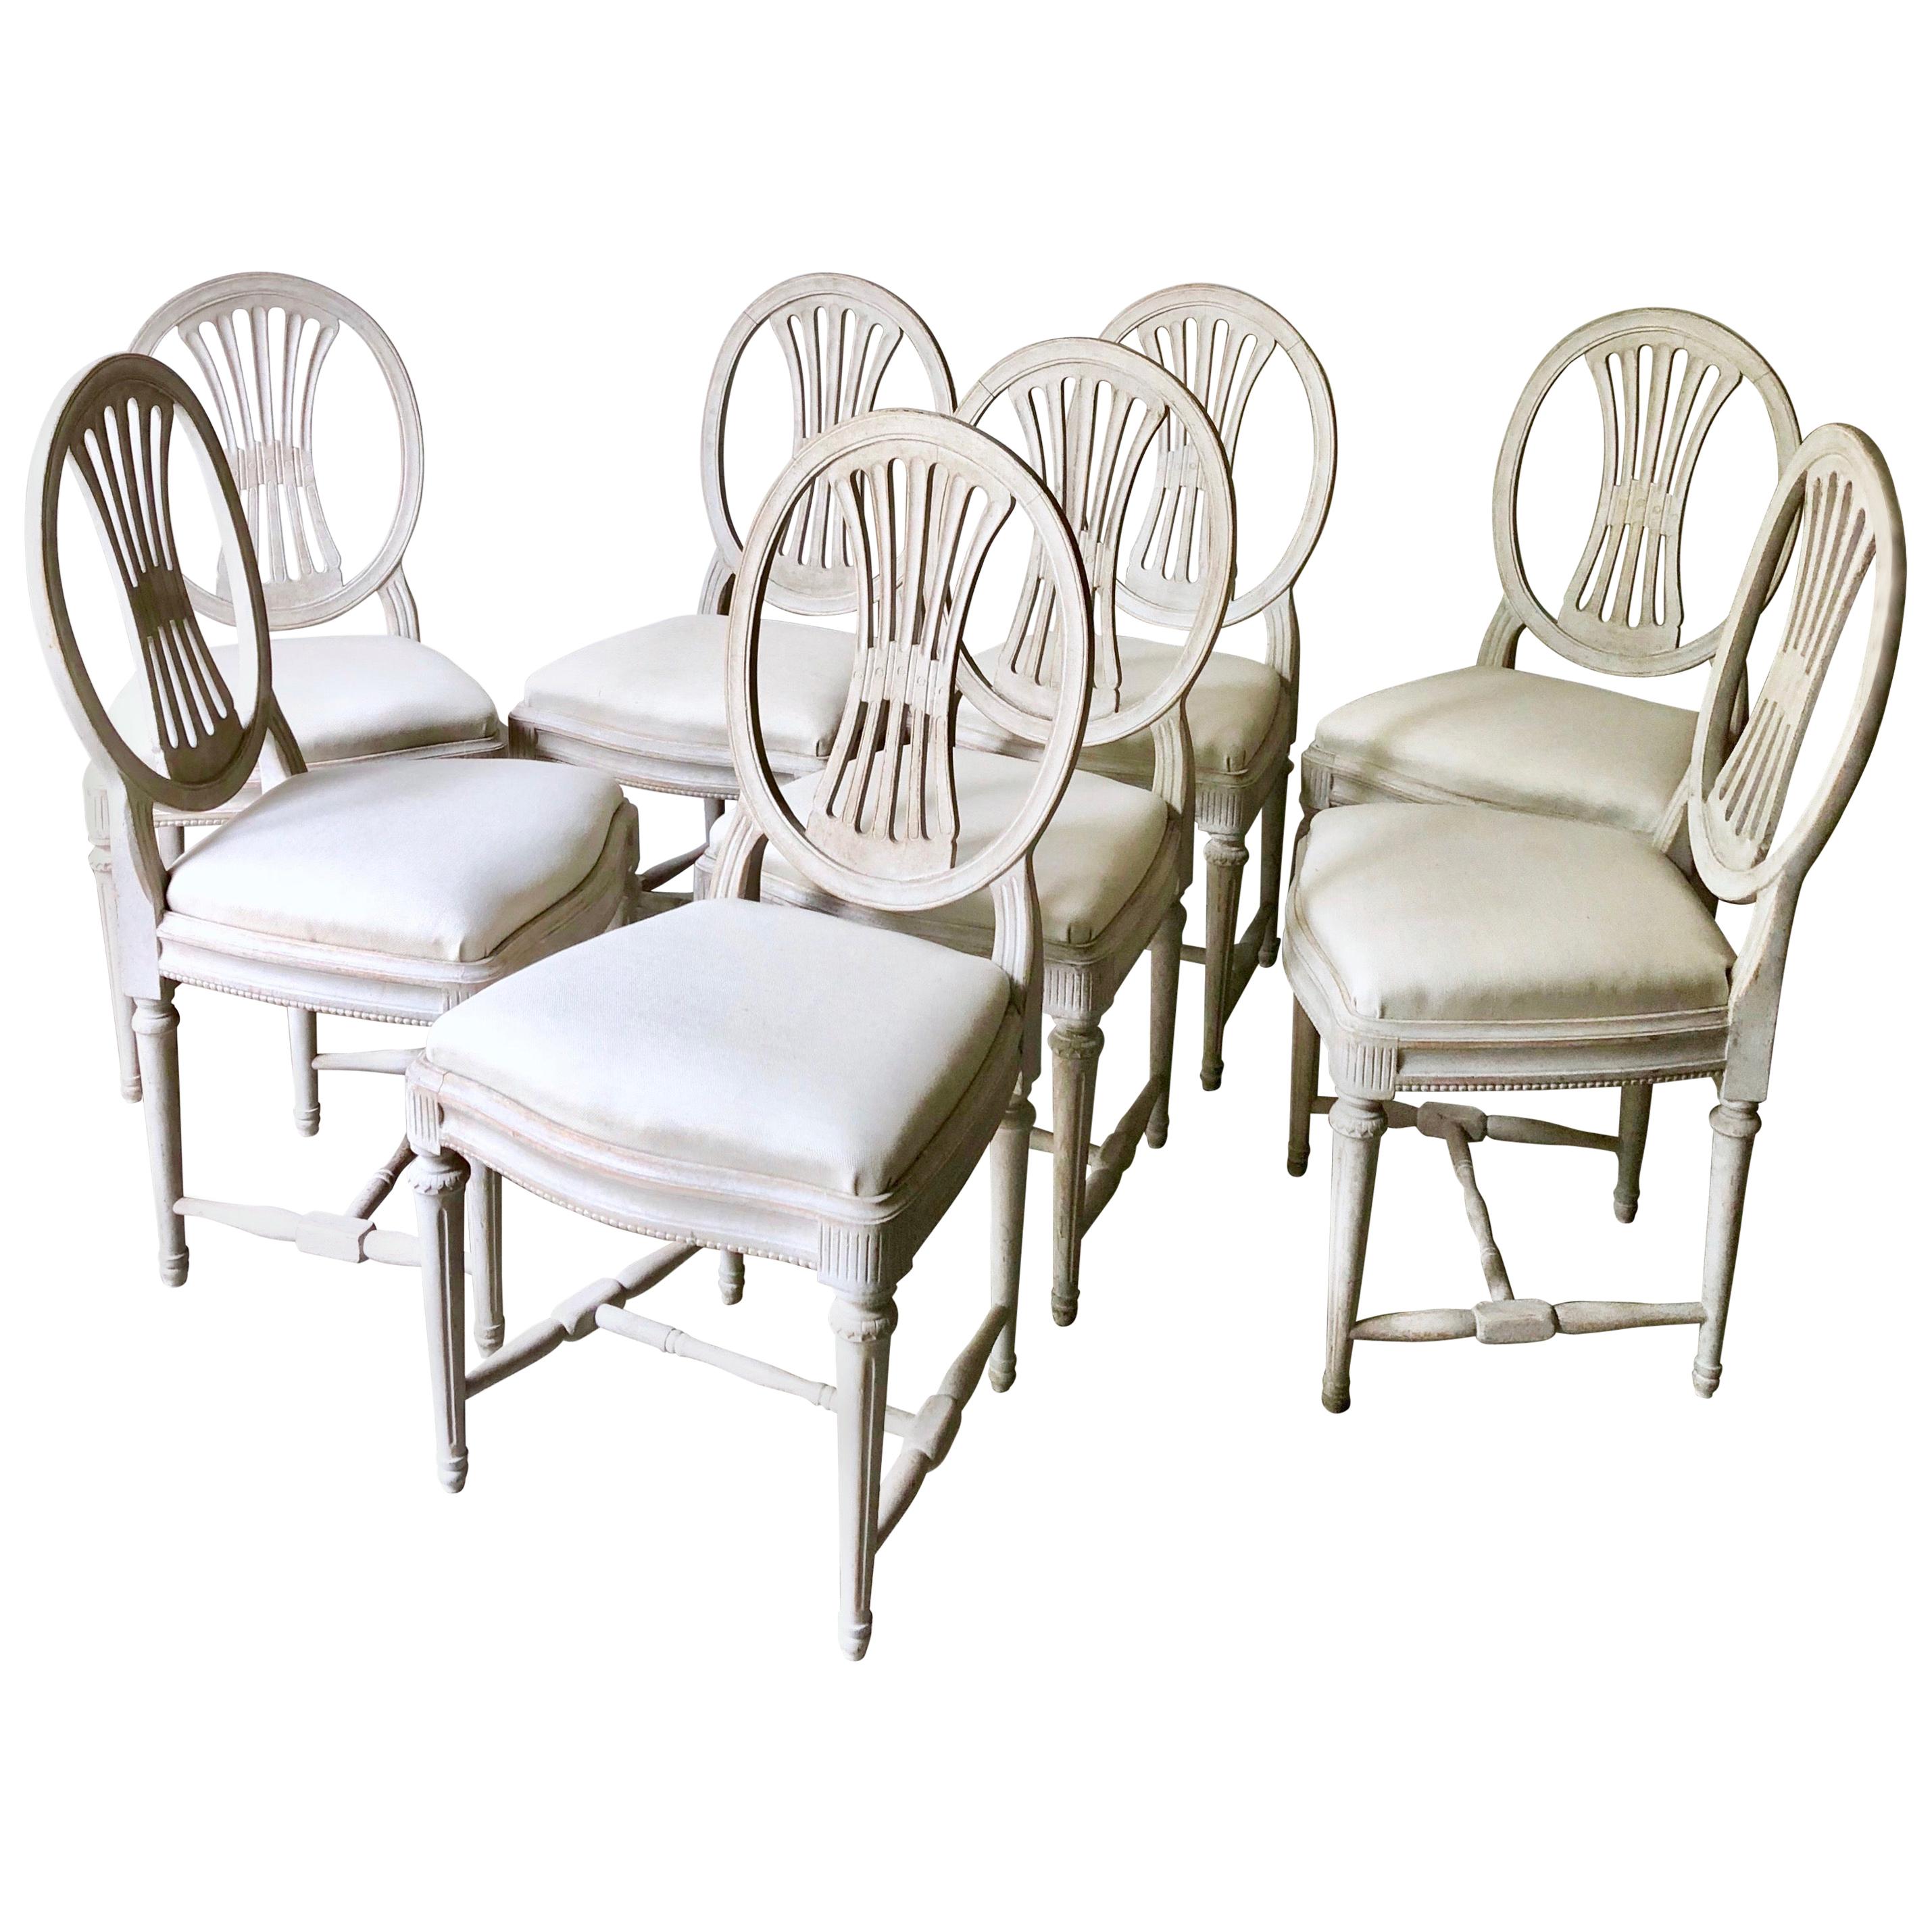 Set of Eight Swedish Painted Weatsheaf Dining Chairs